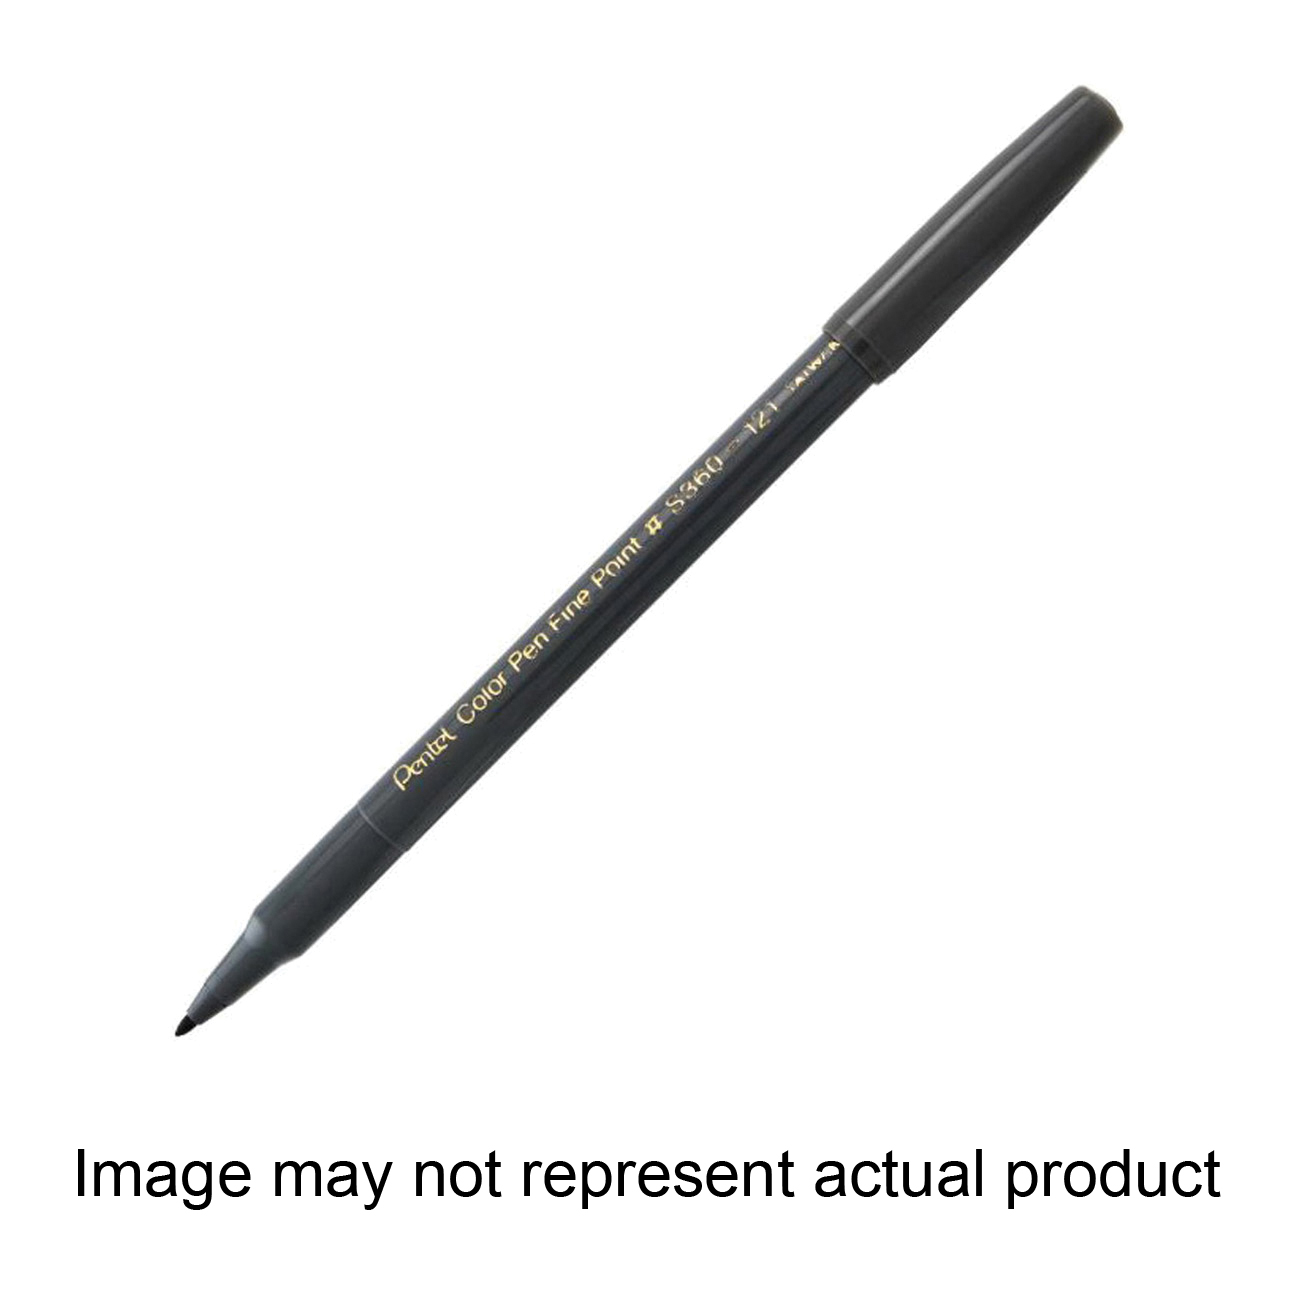 Pentel Arts Color Pen S360-136 Color Pen, Non-Retractable, Fine Tip, Baby Blue Ink, Water-Based Ink - 1